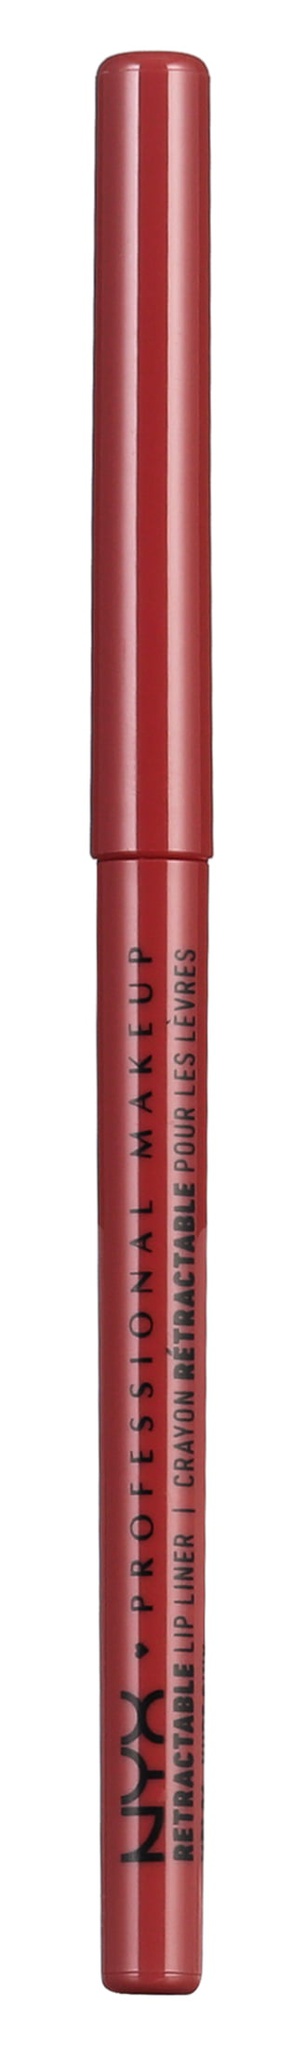 NYX Professional Makeup Retractable Lip Liner Nude Pink